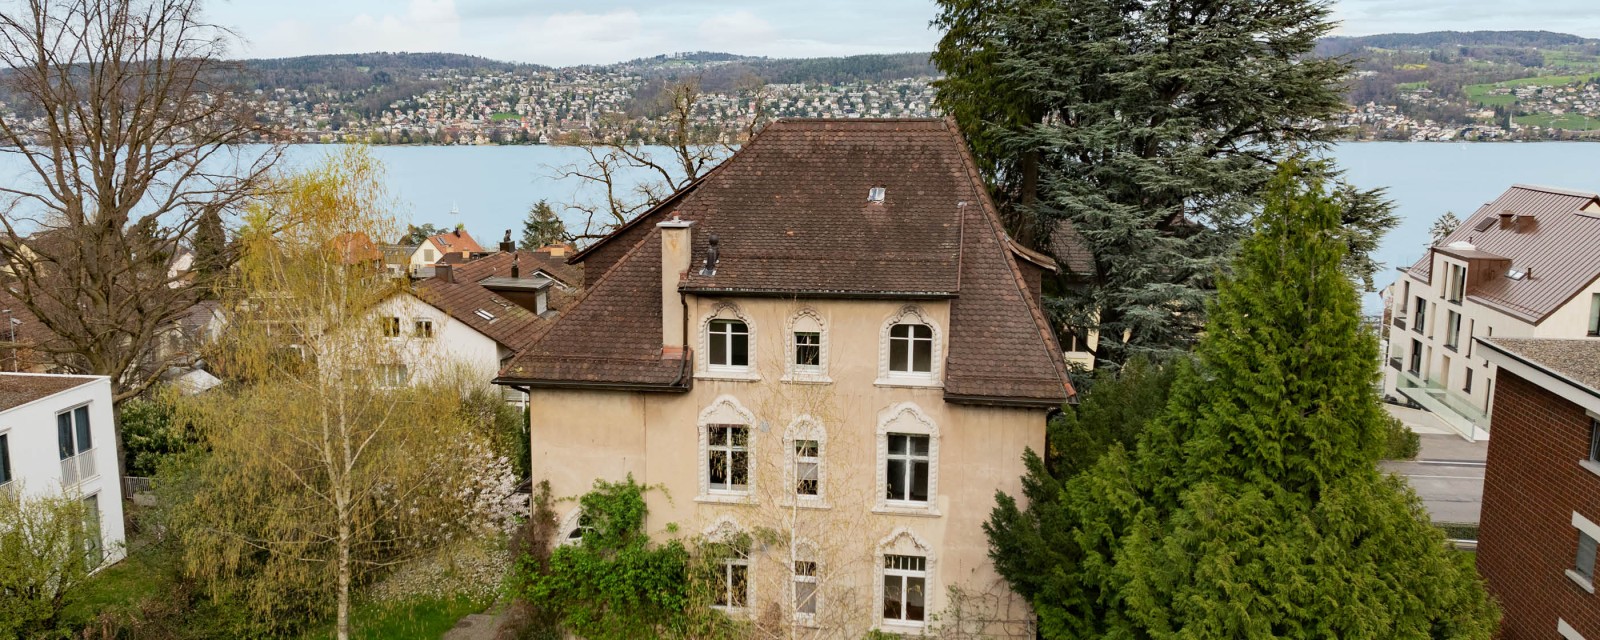 zh_zuerich_rueschlikon_la-beaute-classique_historische-villa-mit-seeblick_zuerichsee_david-hauptmann_nobilis-estate_8.jpg